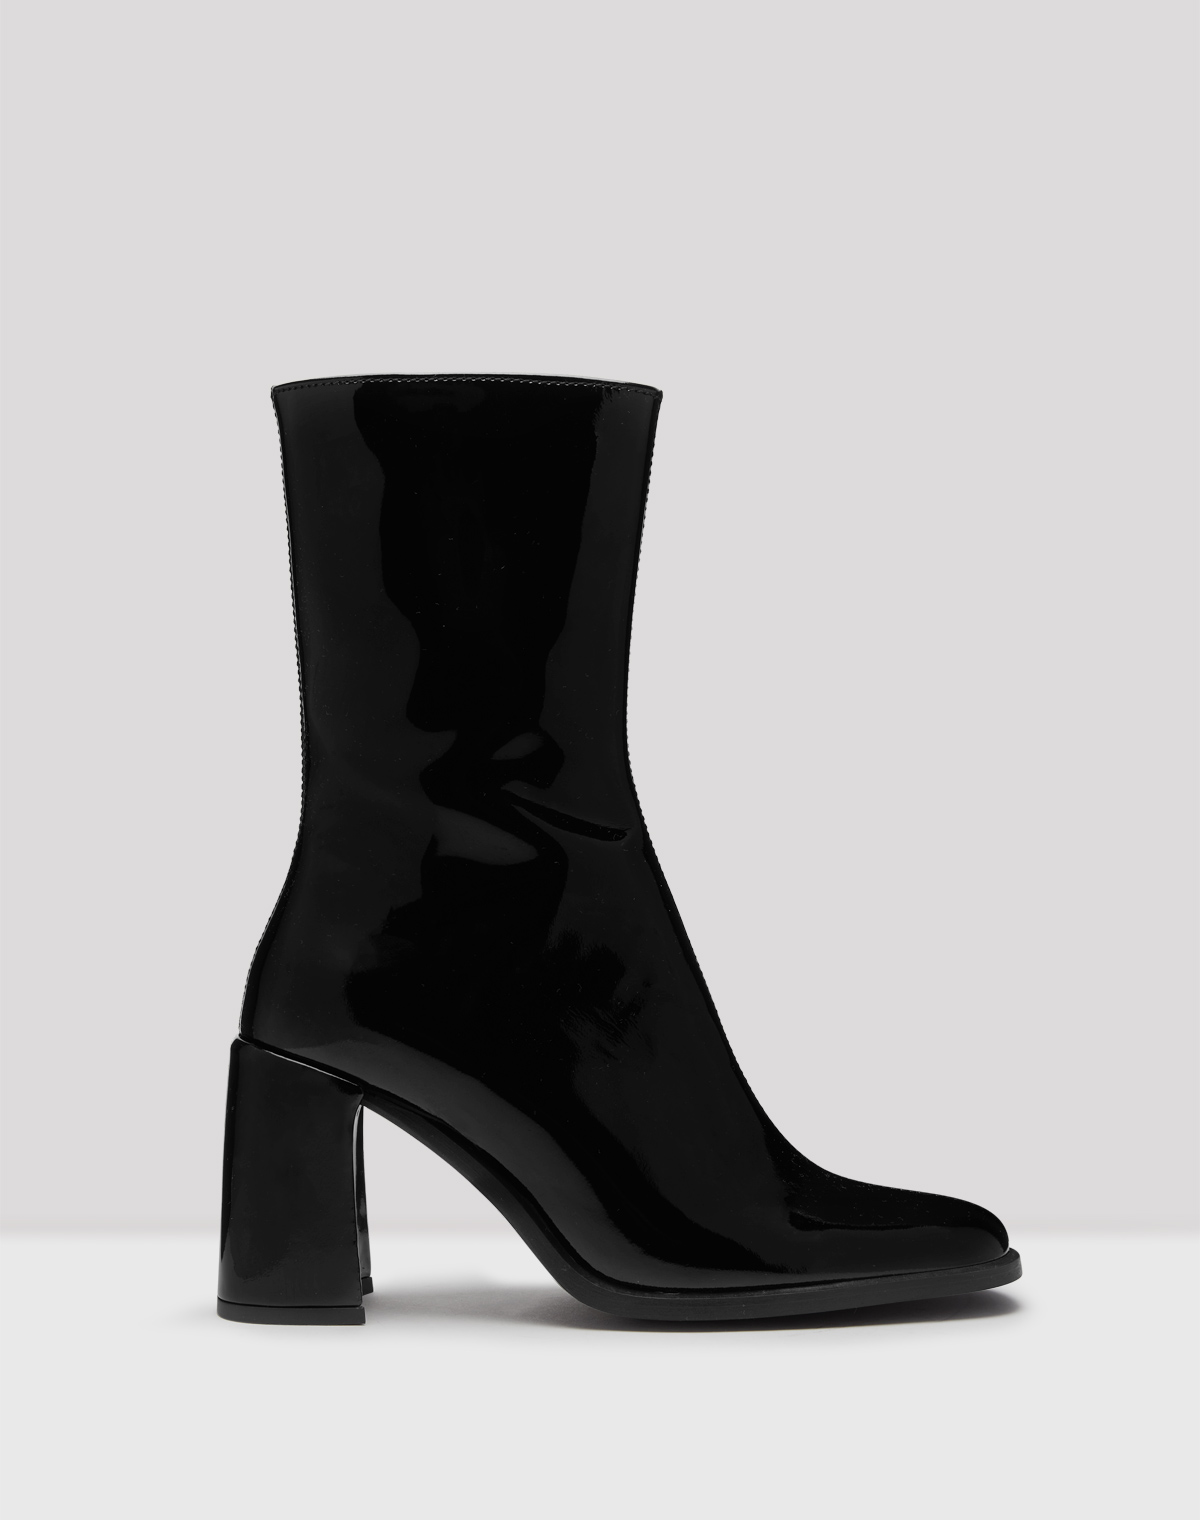 Asta Black Patent Leather Boots // E8 